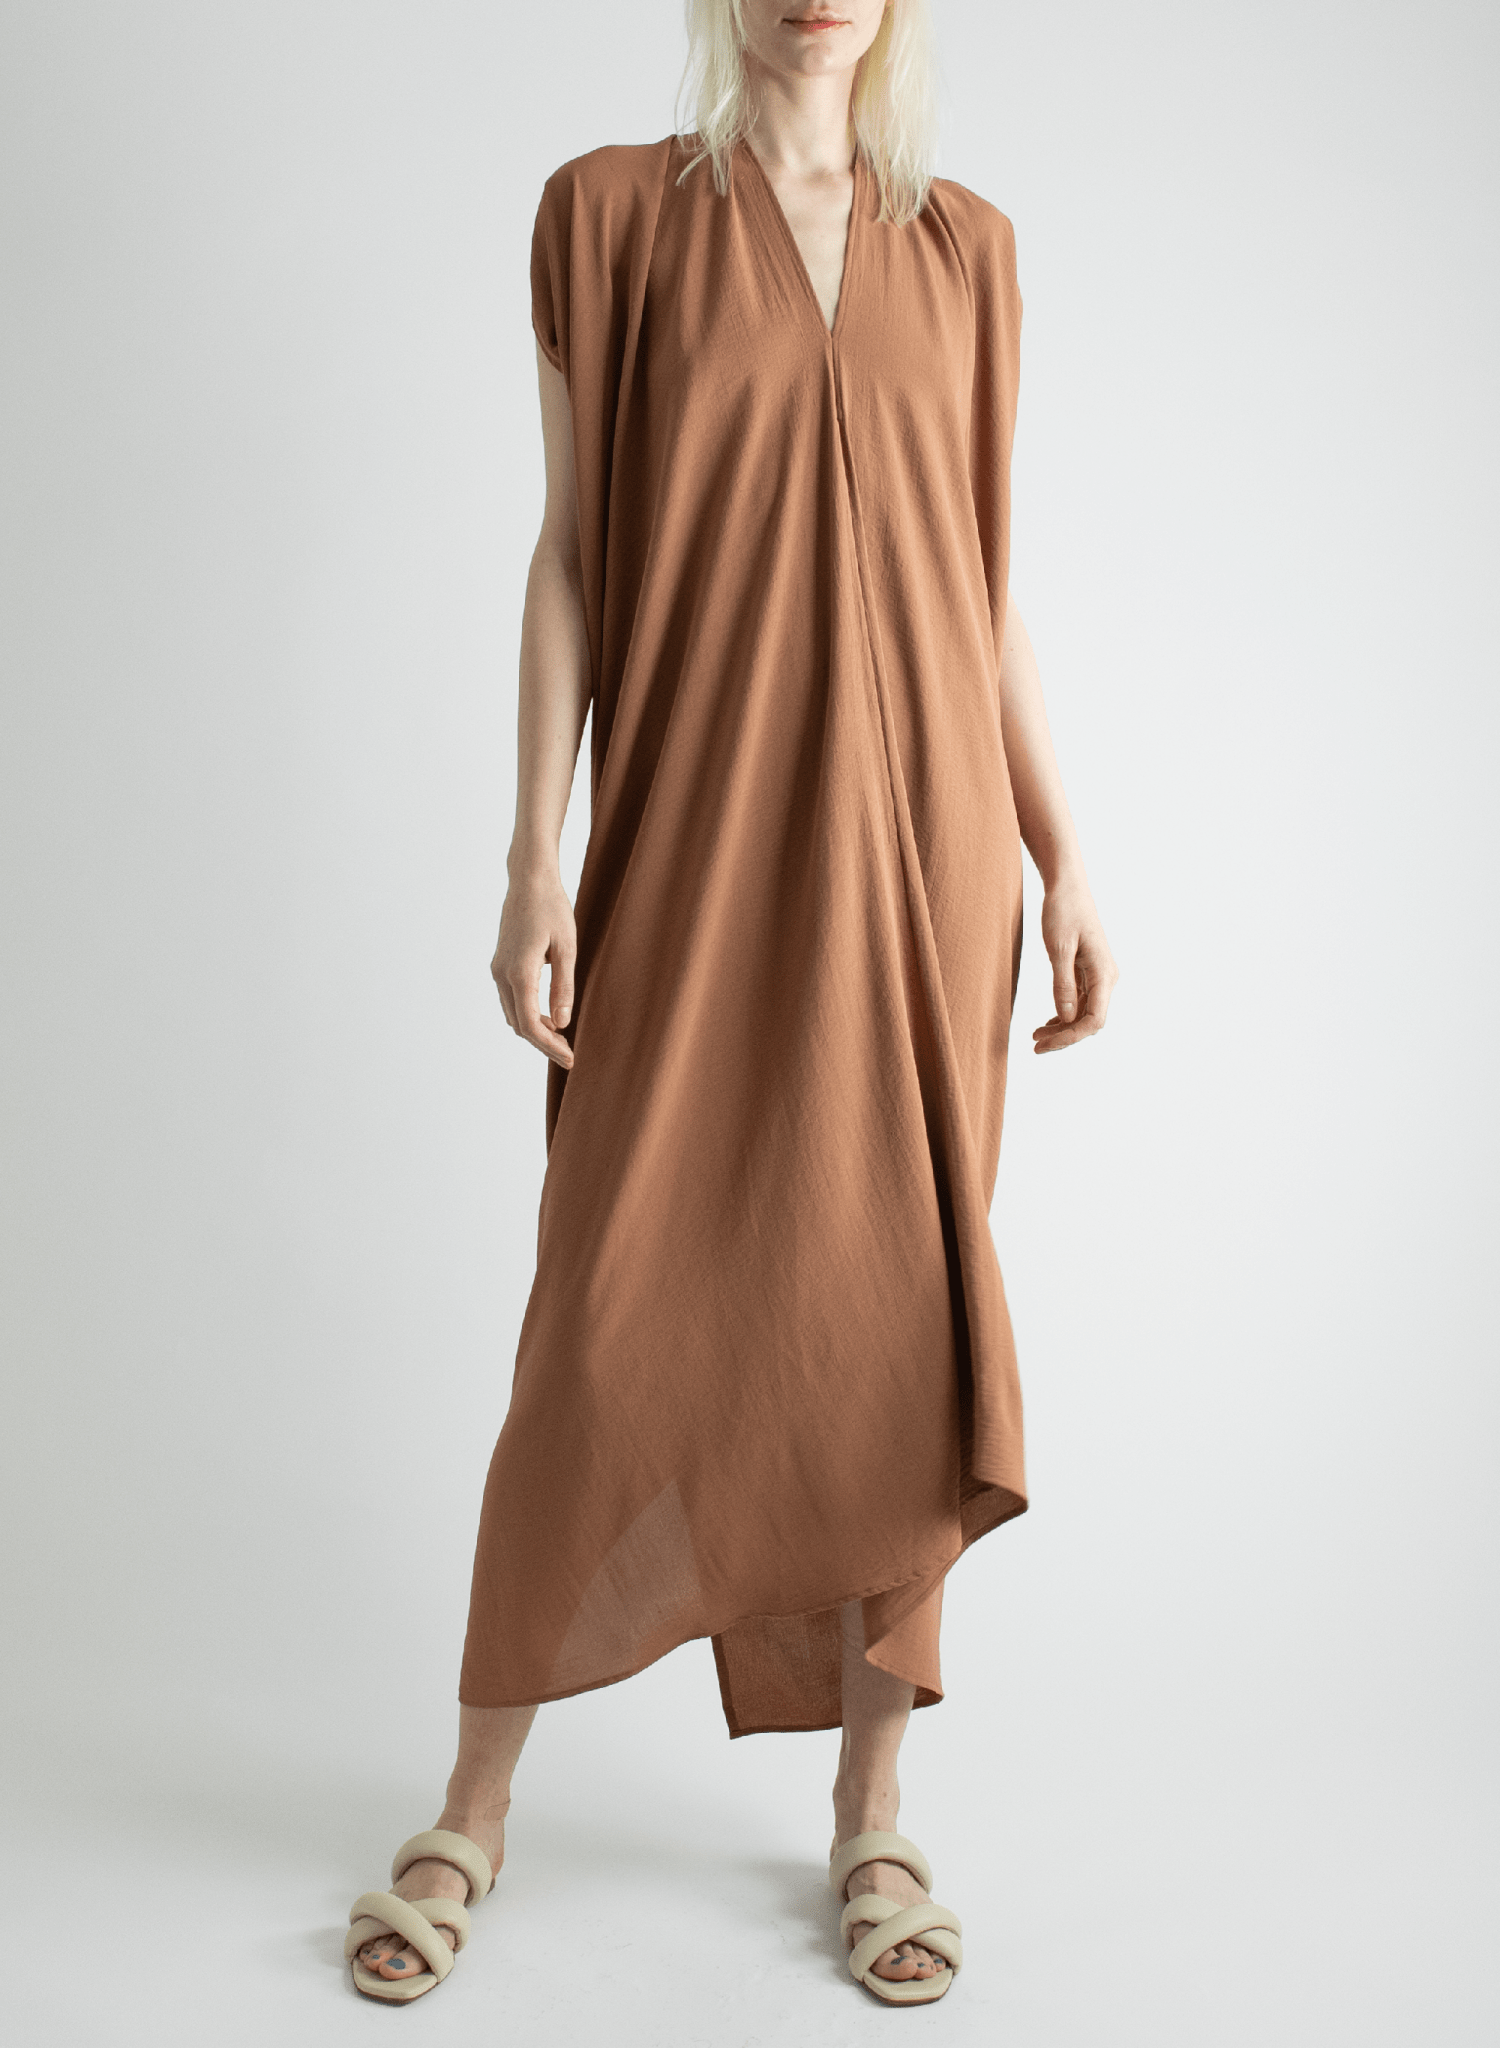 Abstraction Dress - Latte - Meg